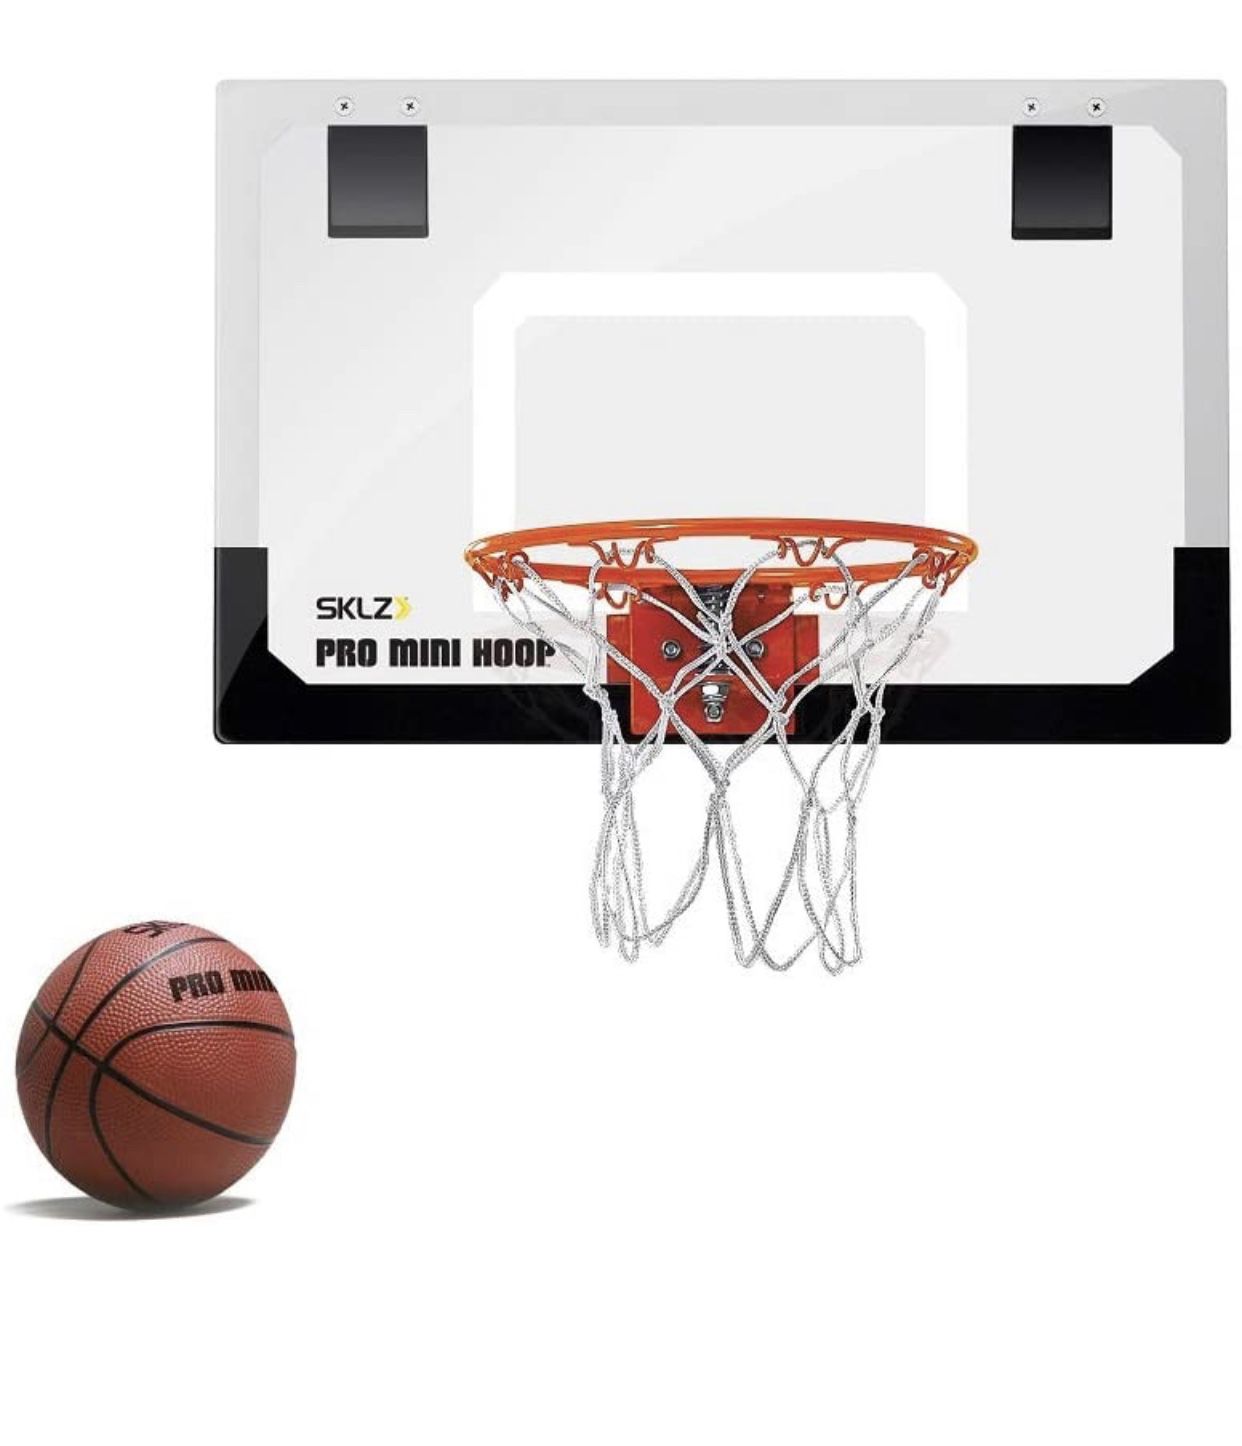 SKLZ Pro Mini Basketball Hoop Amazon's Choice in Basketball Wall-Mount Hoops & Goals by SKLZ